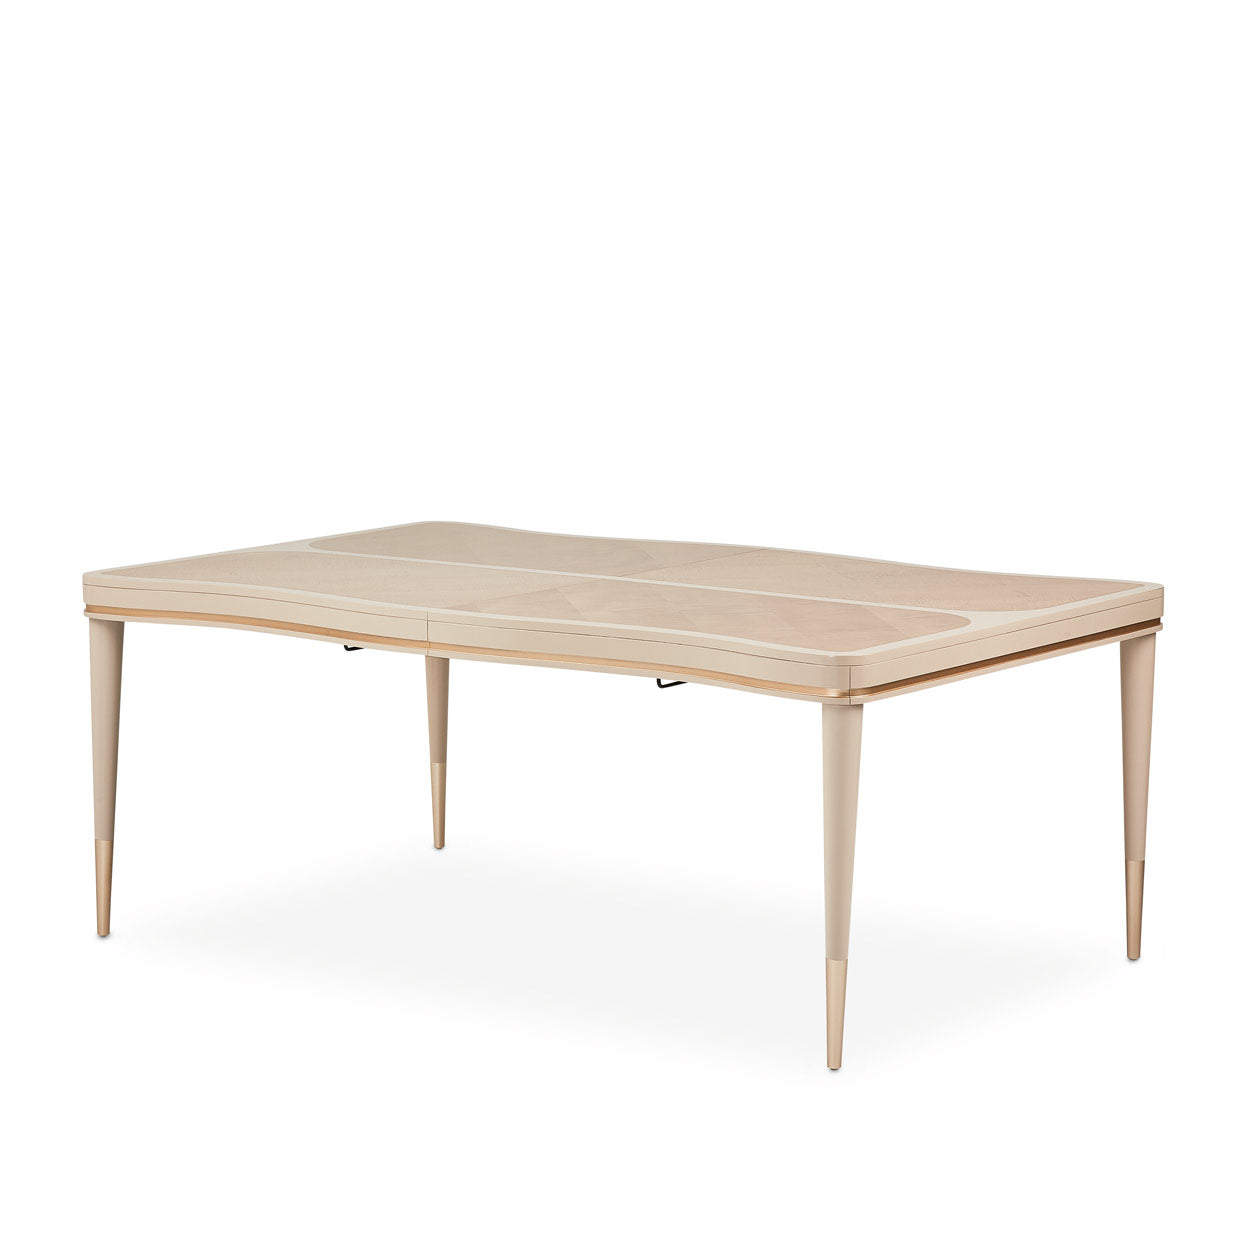 MALIBU CREST 4 Leg Rectangular Dining Table (Includes: 2 X 24 Leaves) - Dream art Gallery